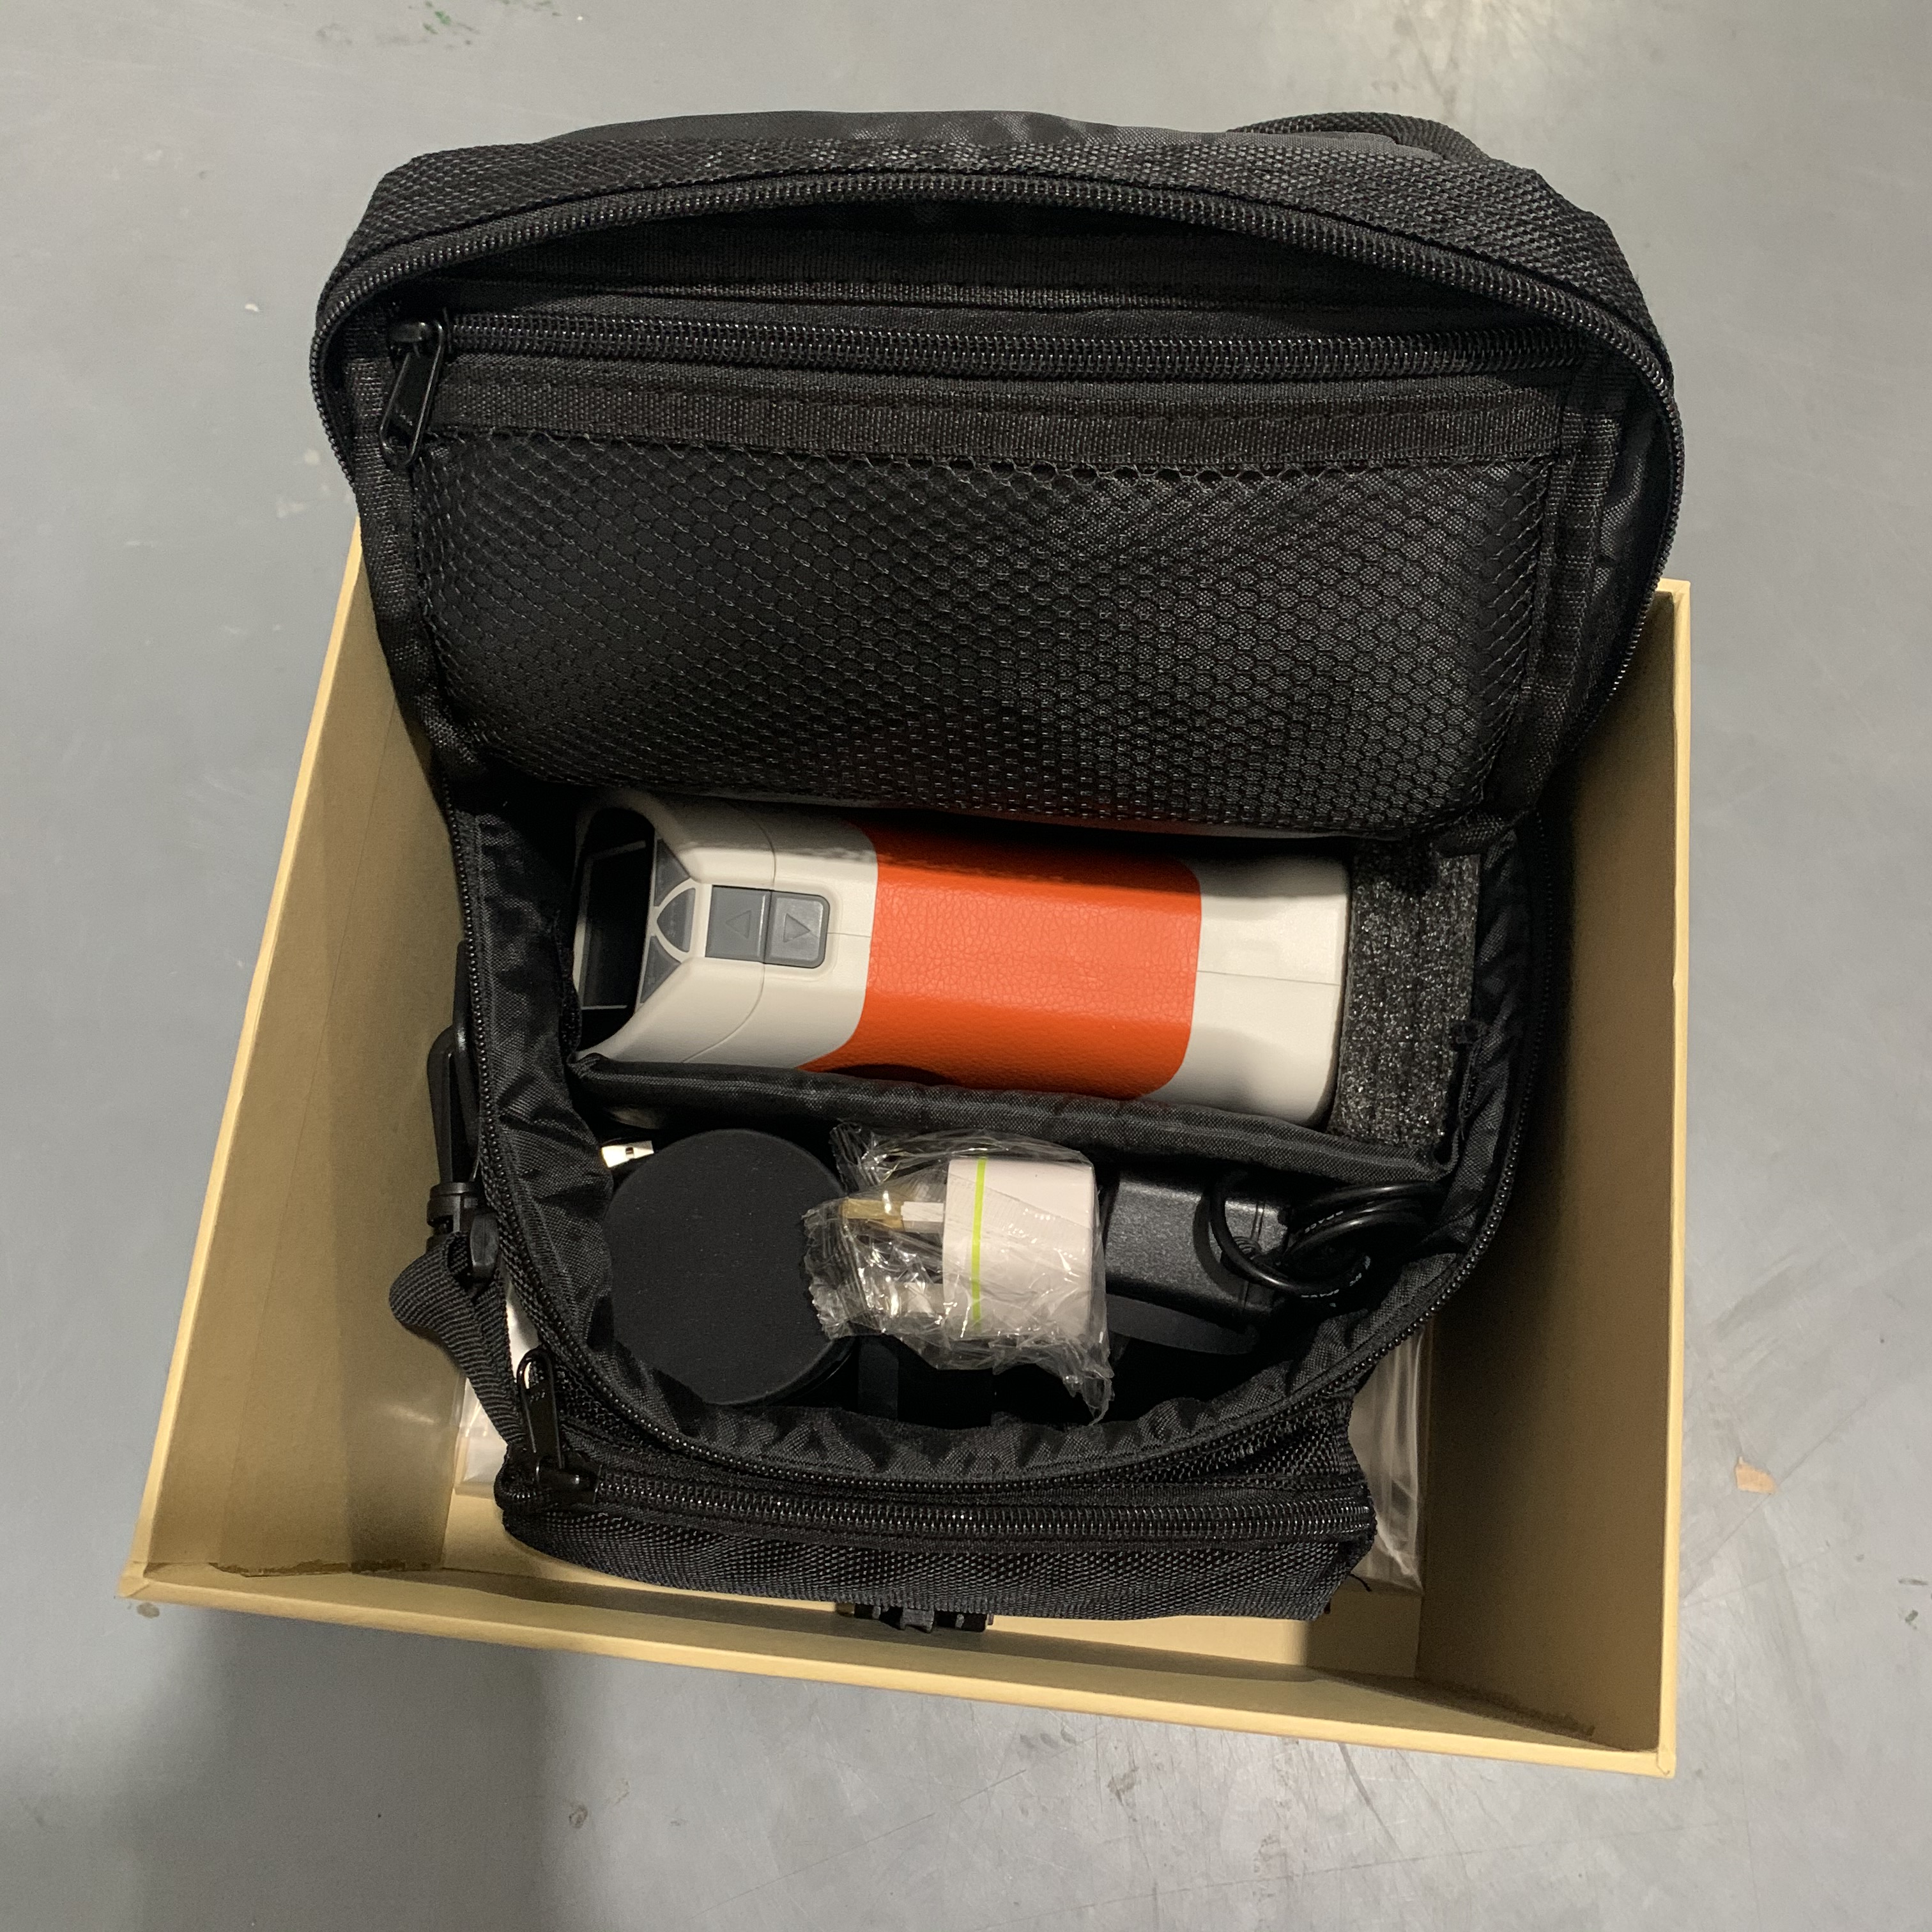 CS-220 Digital Portable Colorimeter